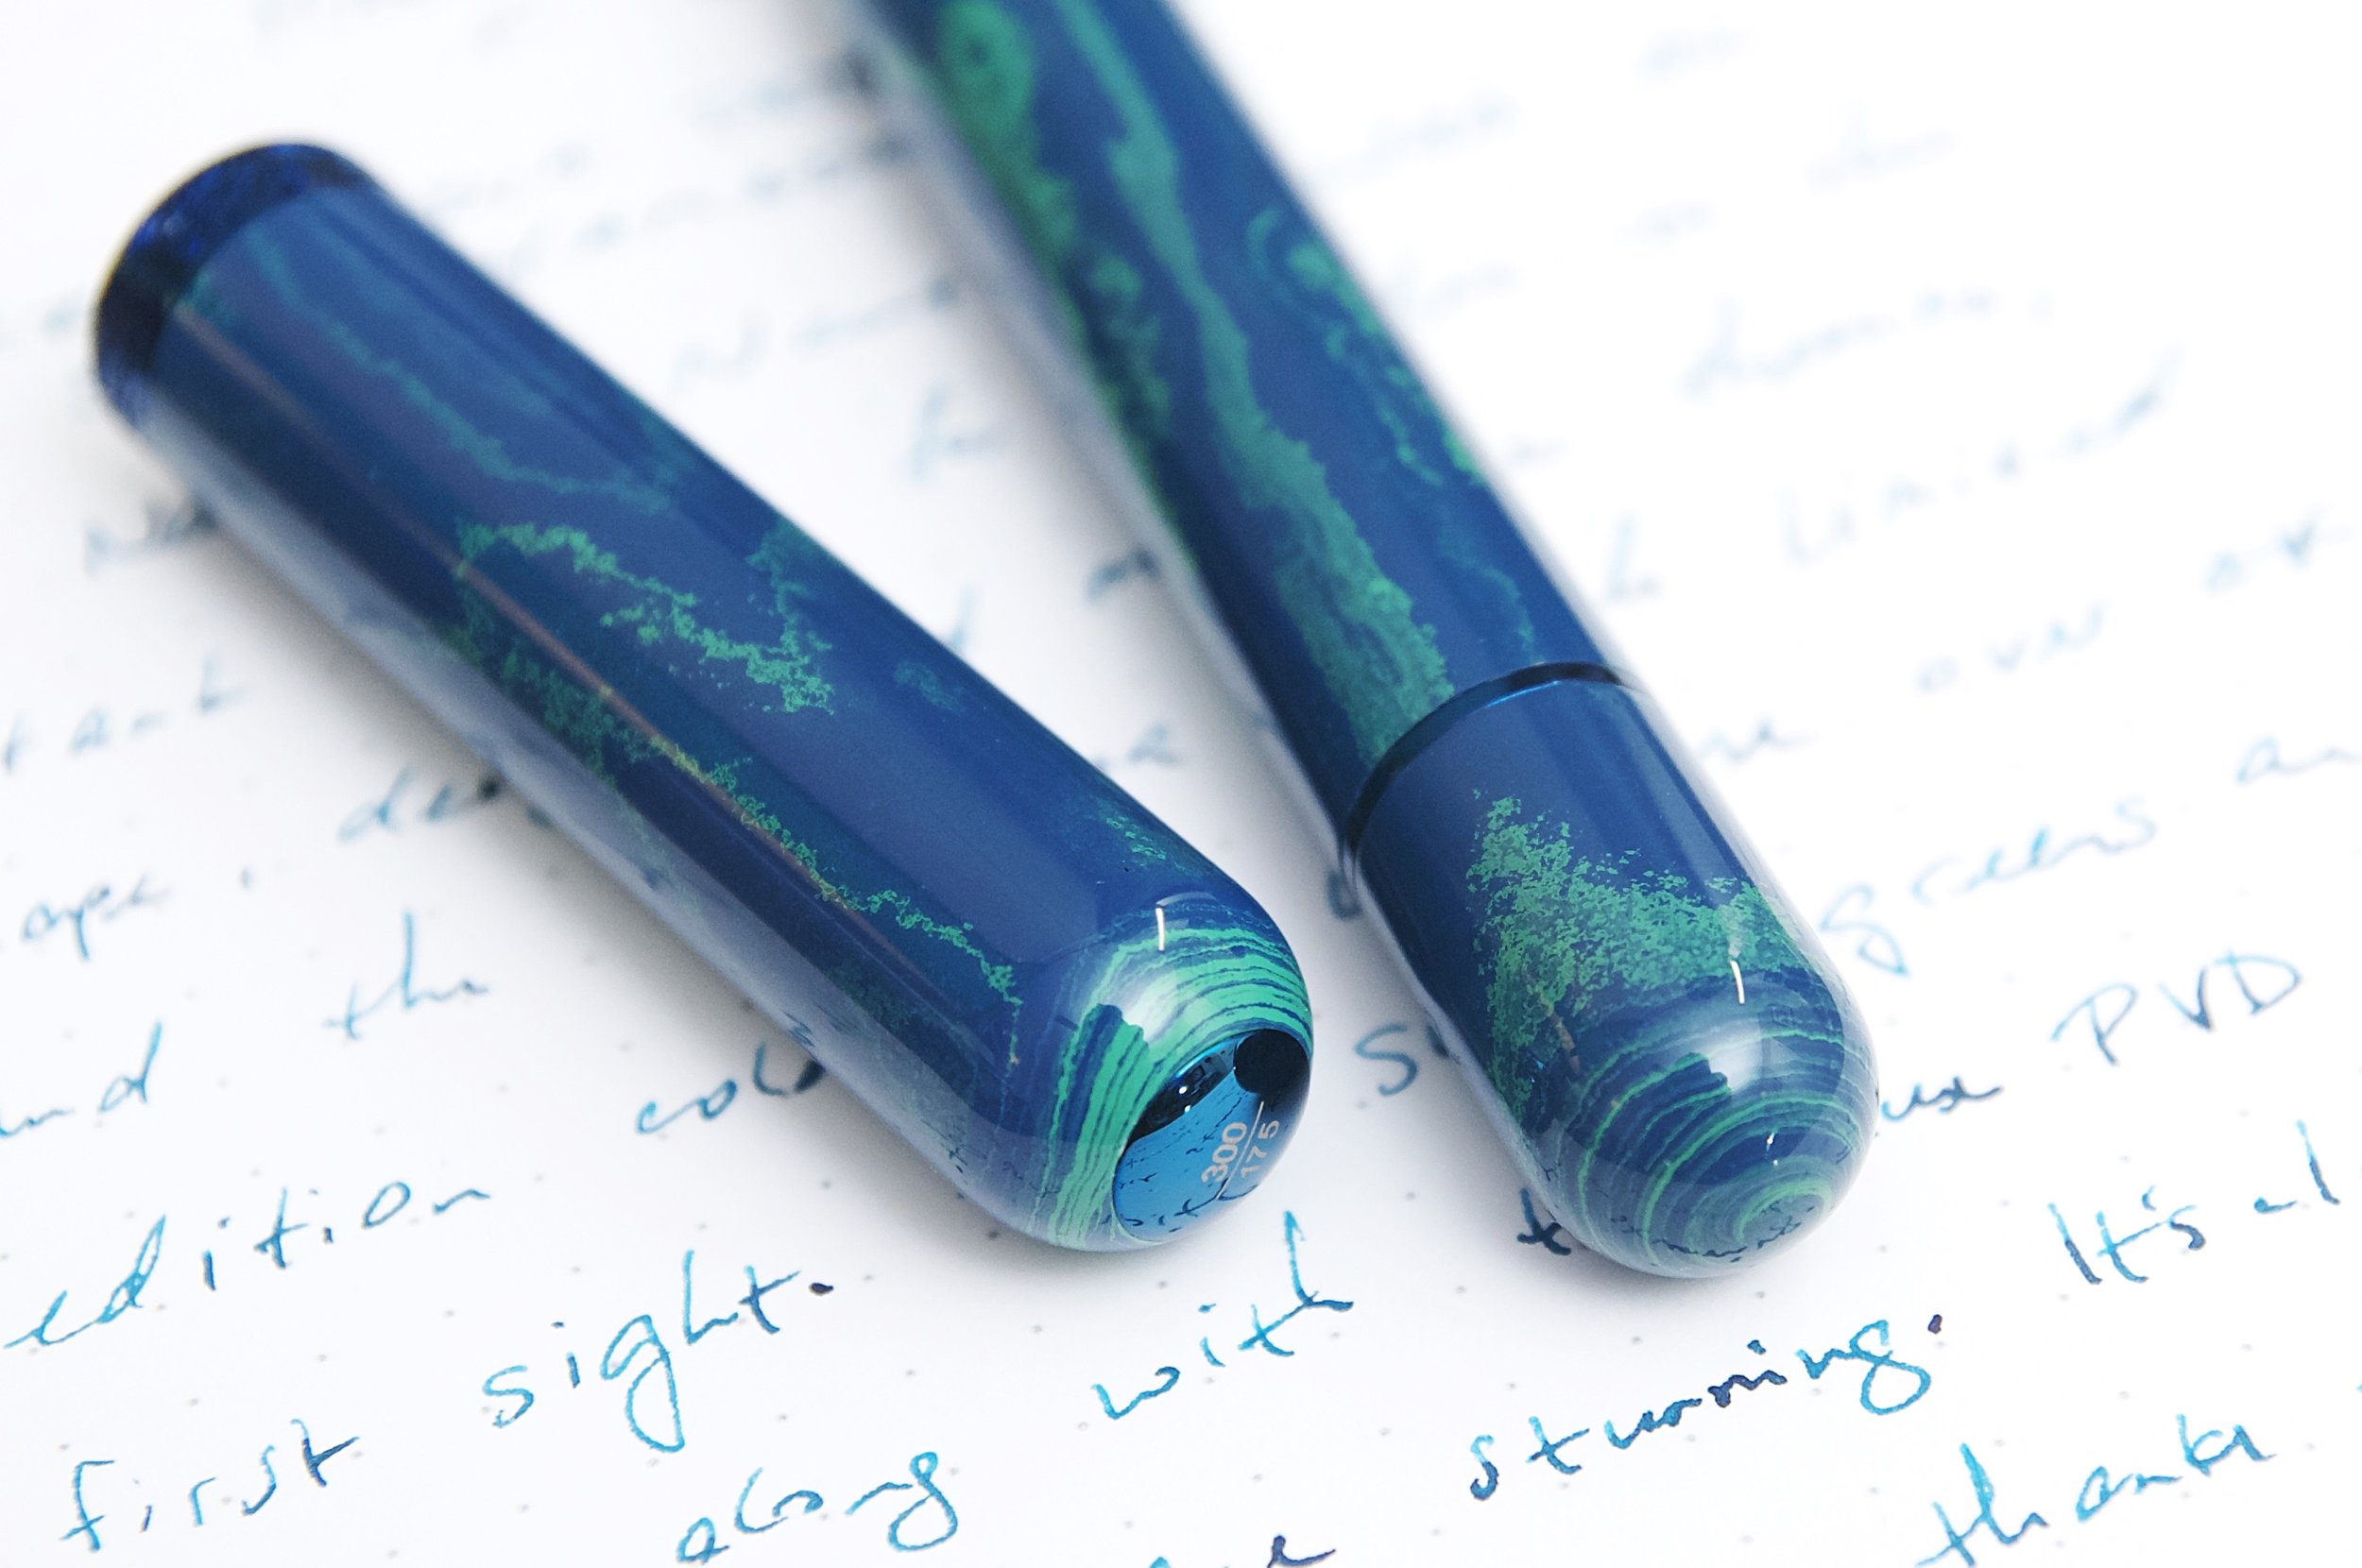 EK Tools Journaling Pen Review — The Pen Addict